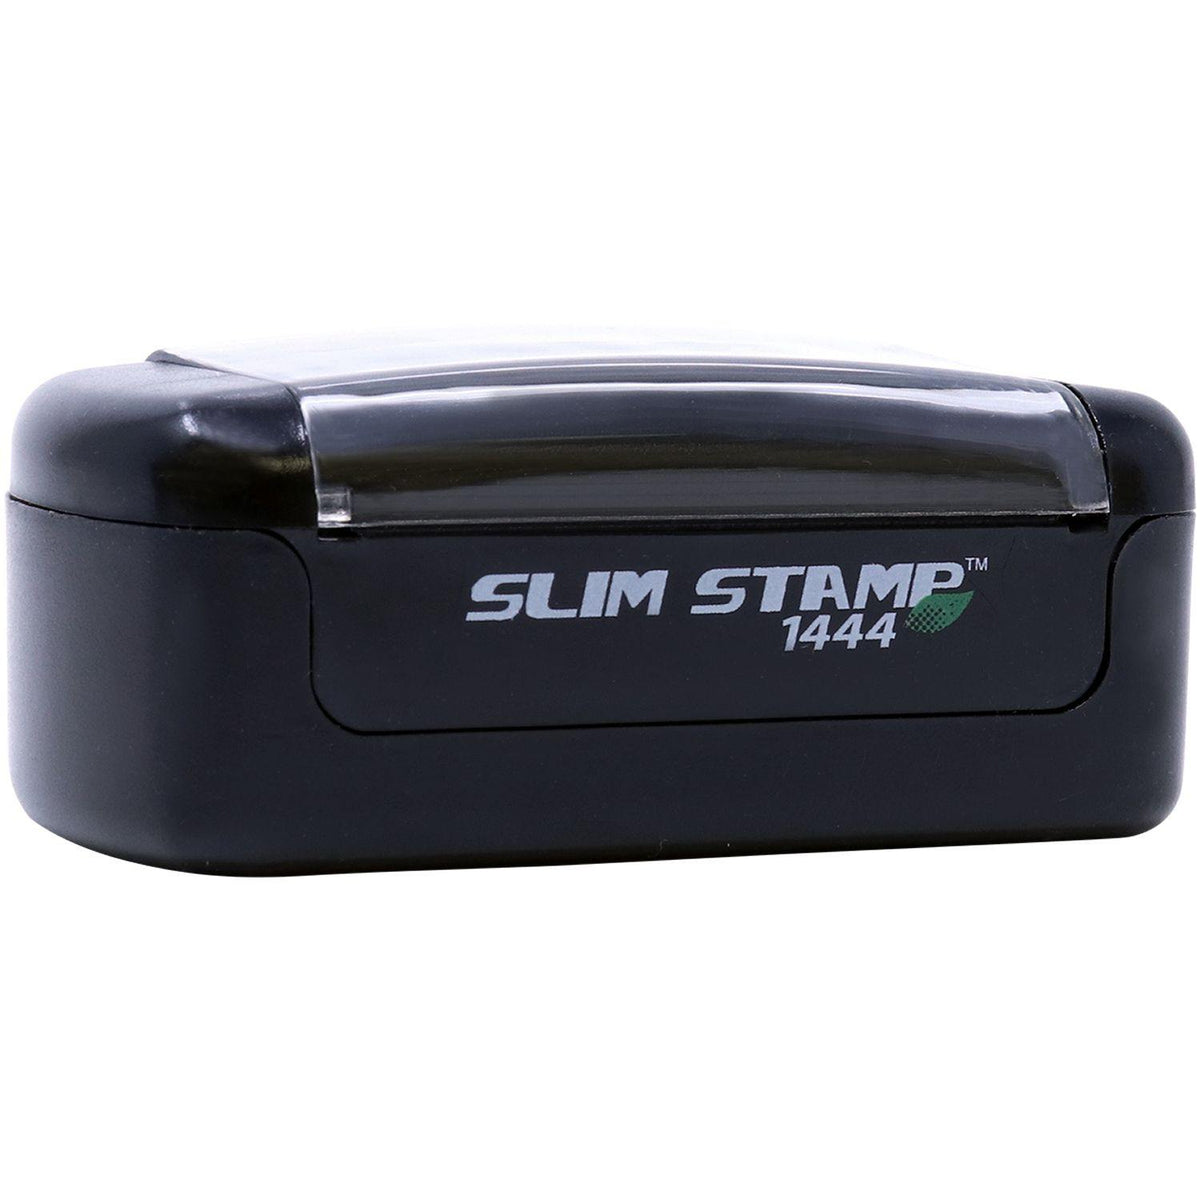 Alt View of Slim Pre Inked Creditors Exhibit Stamp Front View